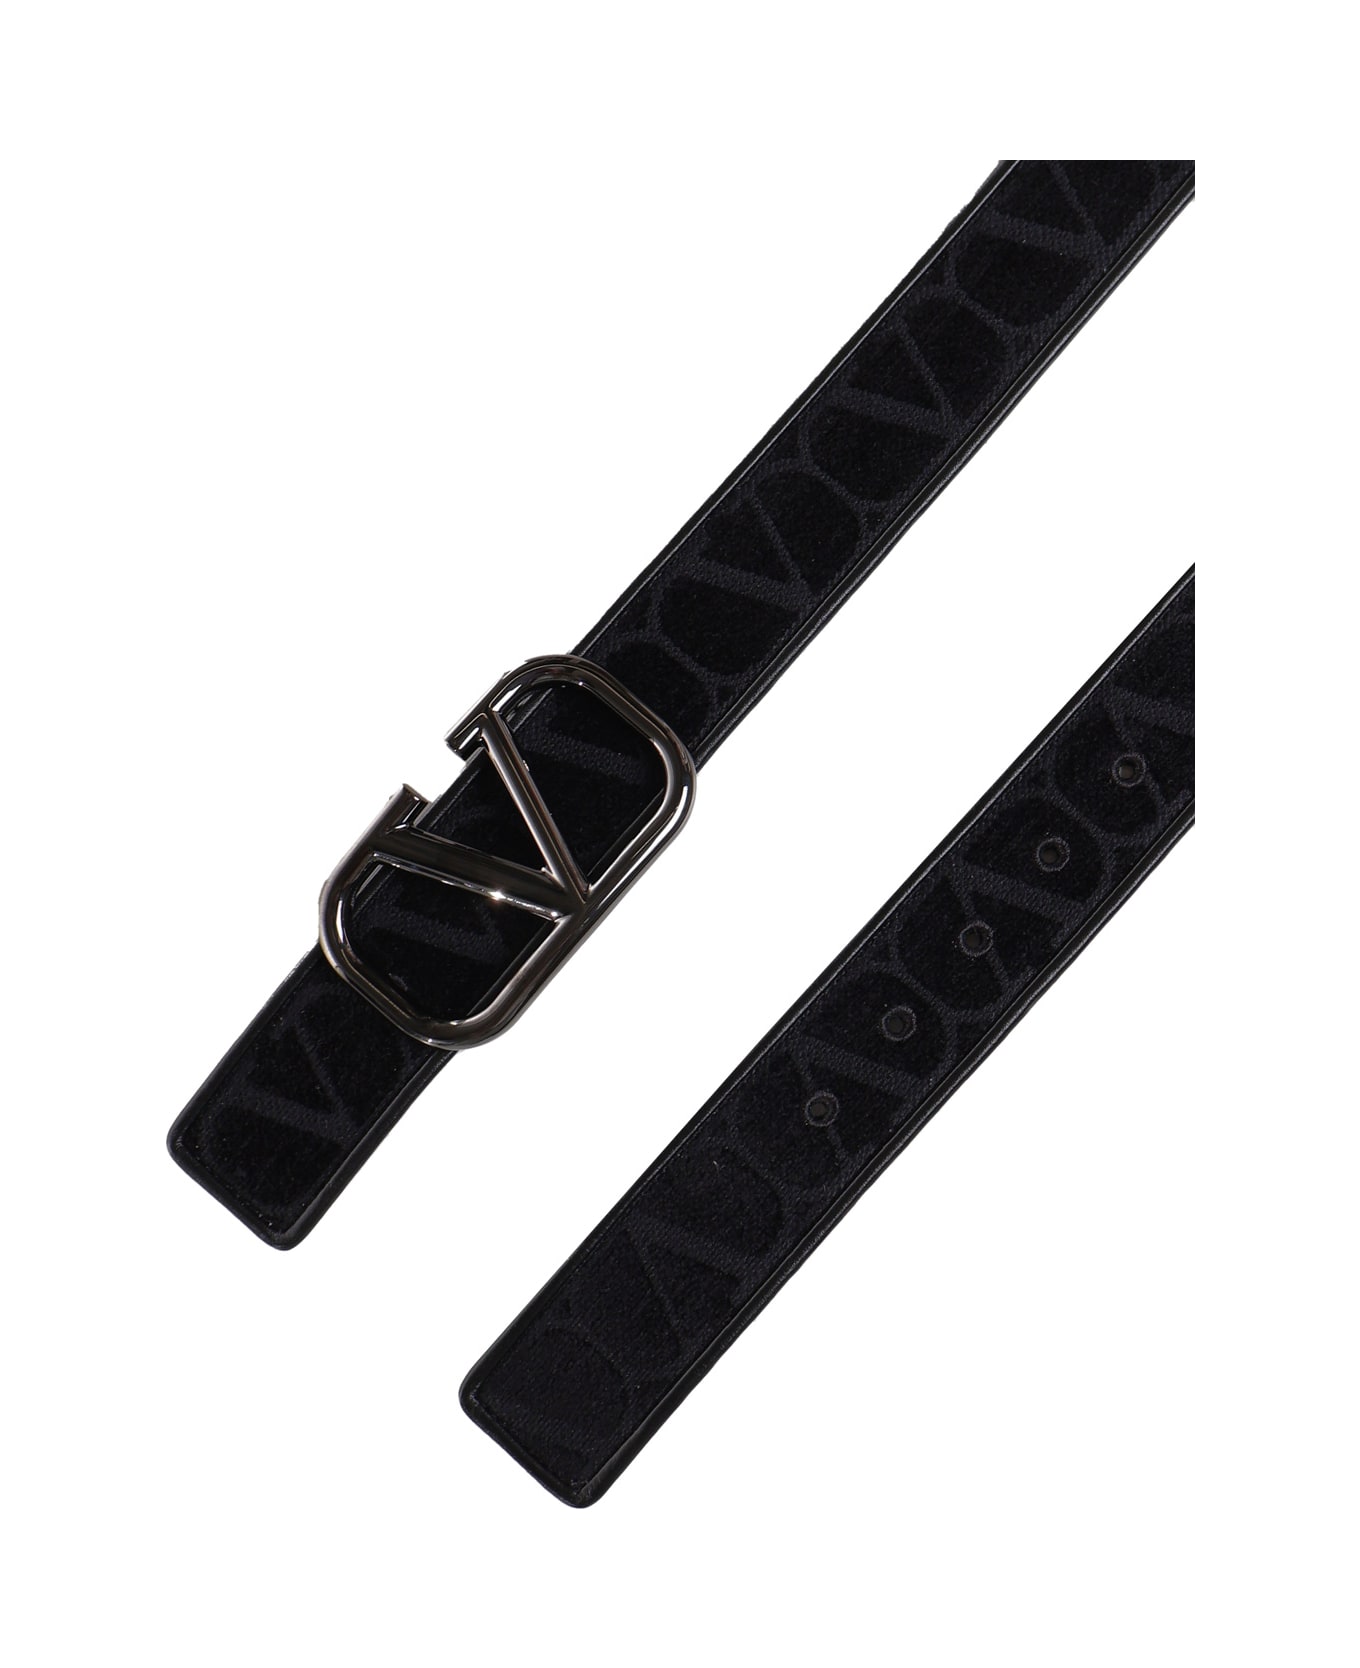 Valentino Garavani Belt With Vlogo Buckle - Black